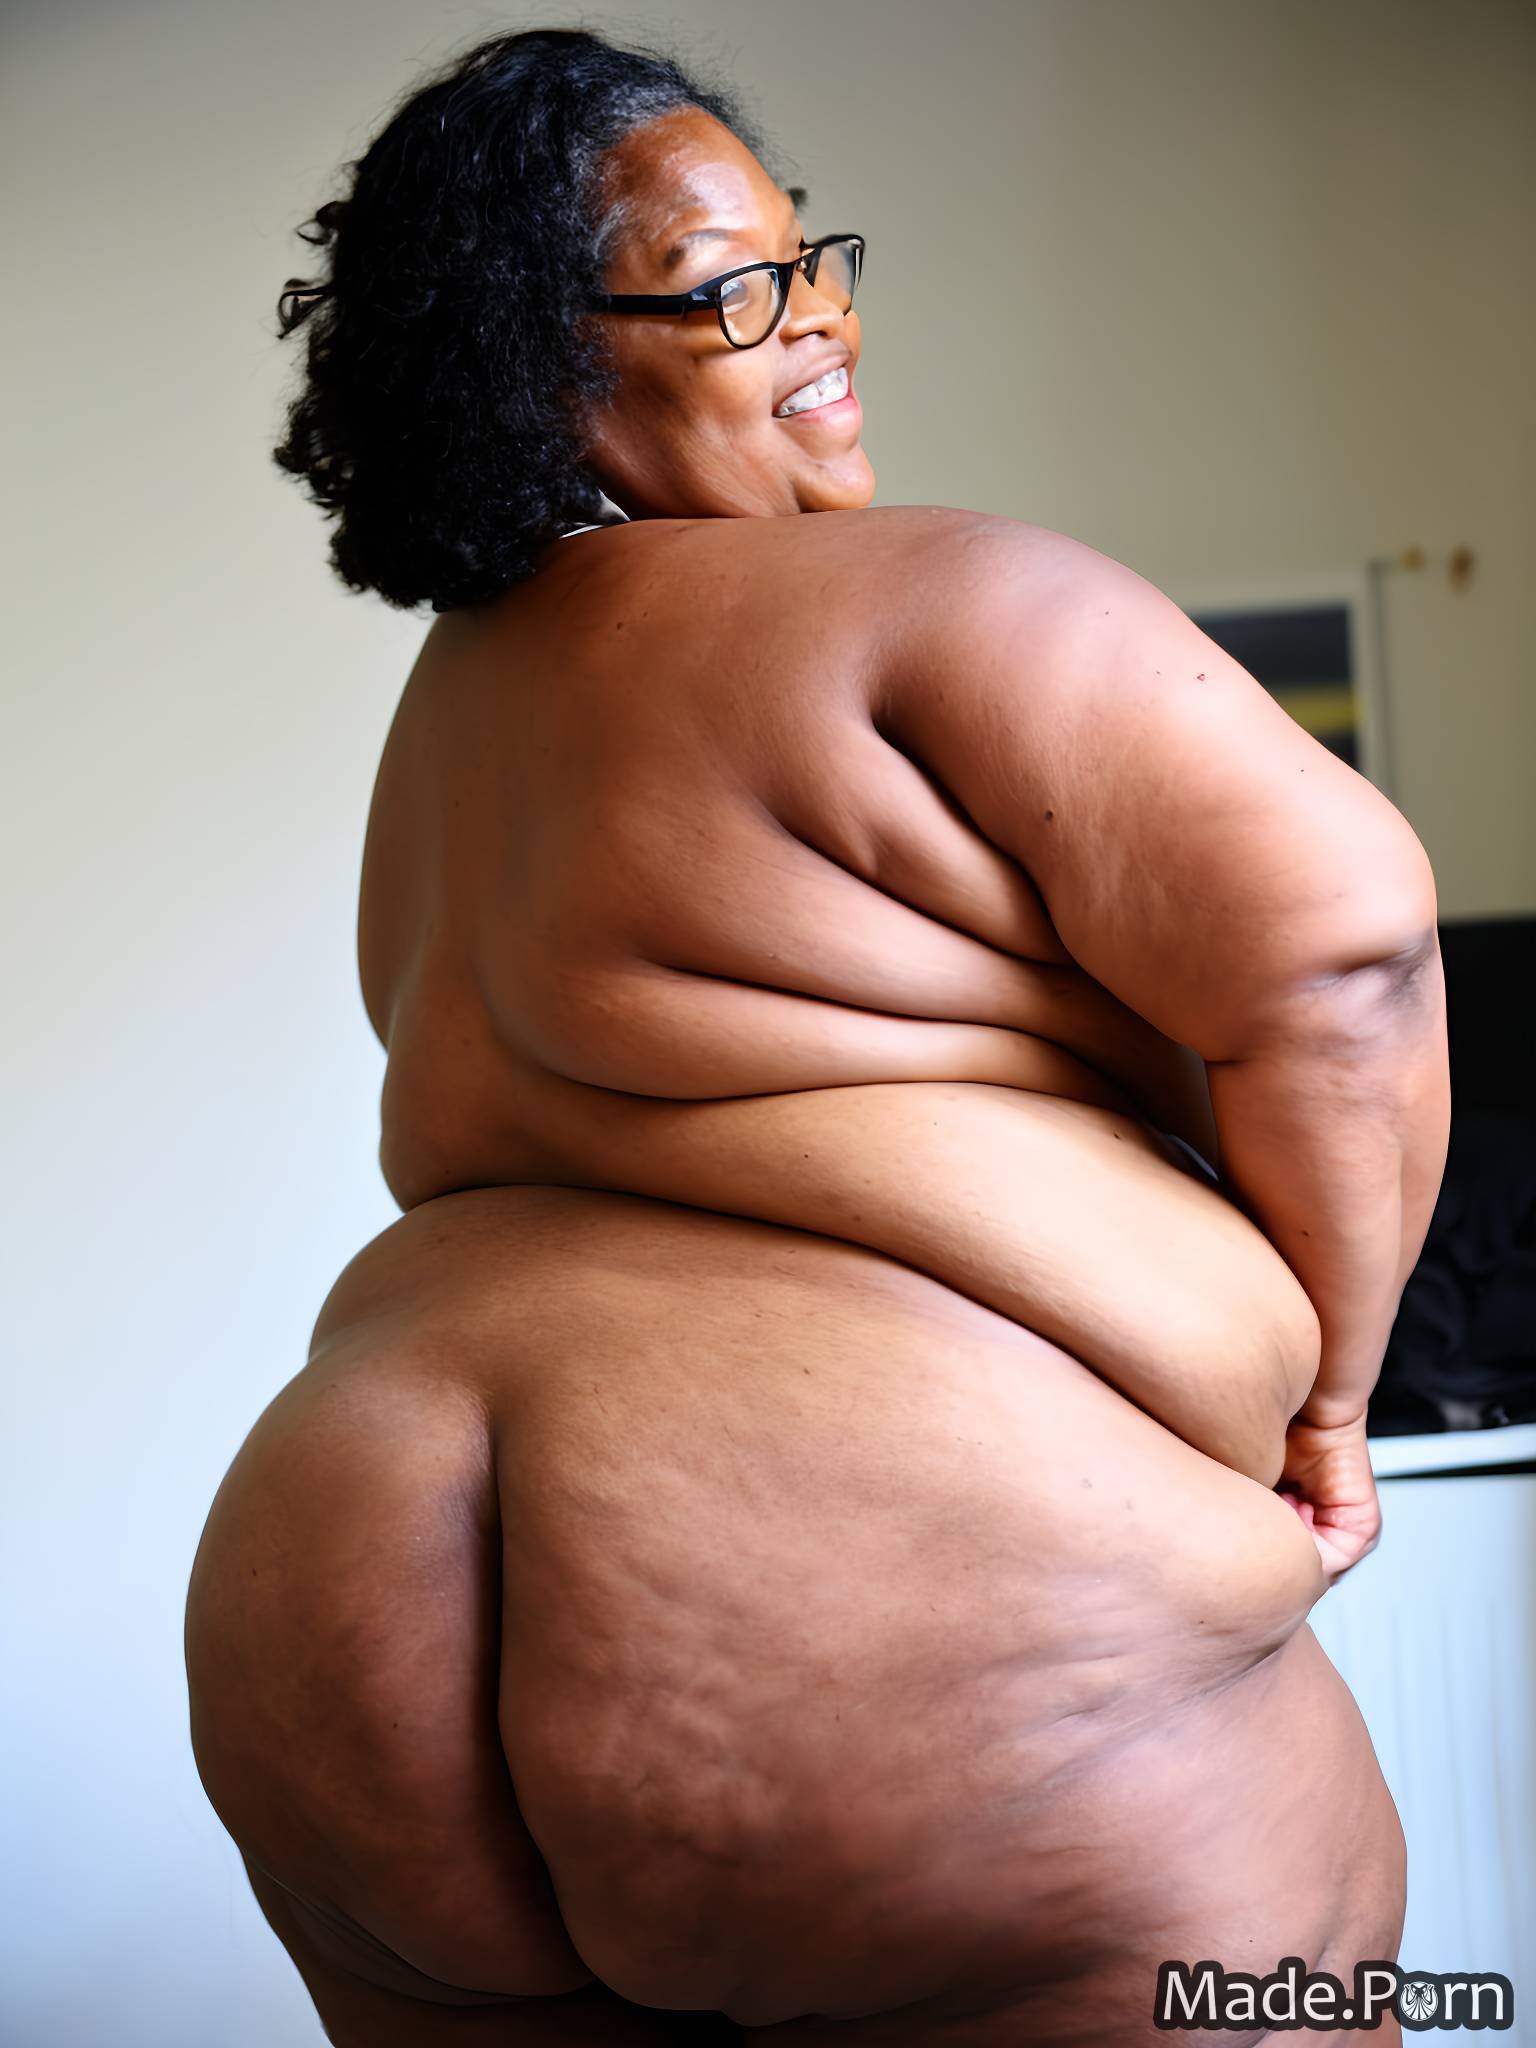 woman colombian big hips long hair photo thick thighs bimbo